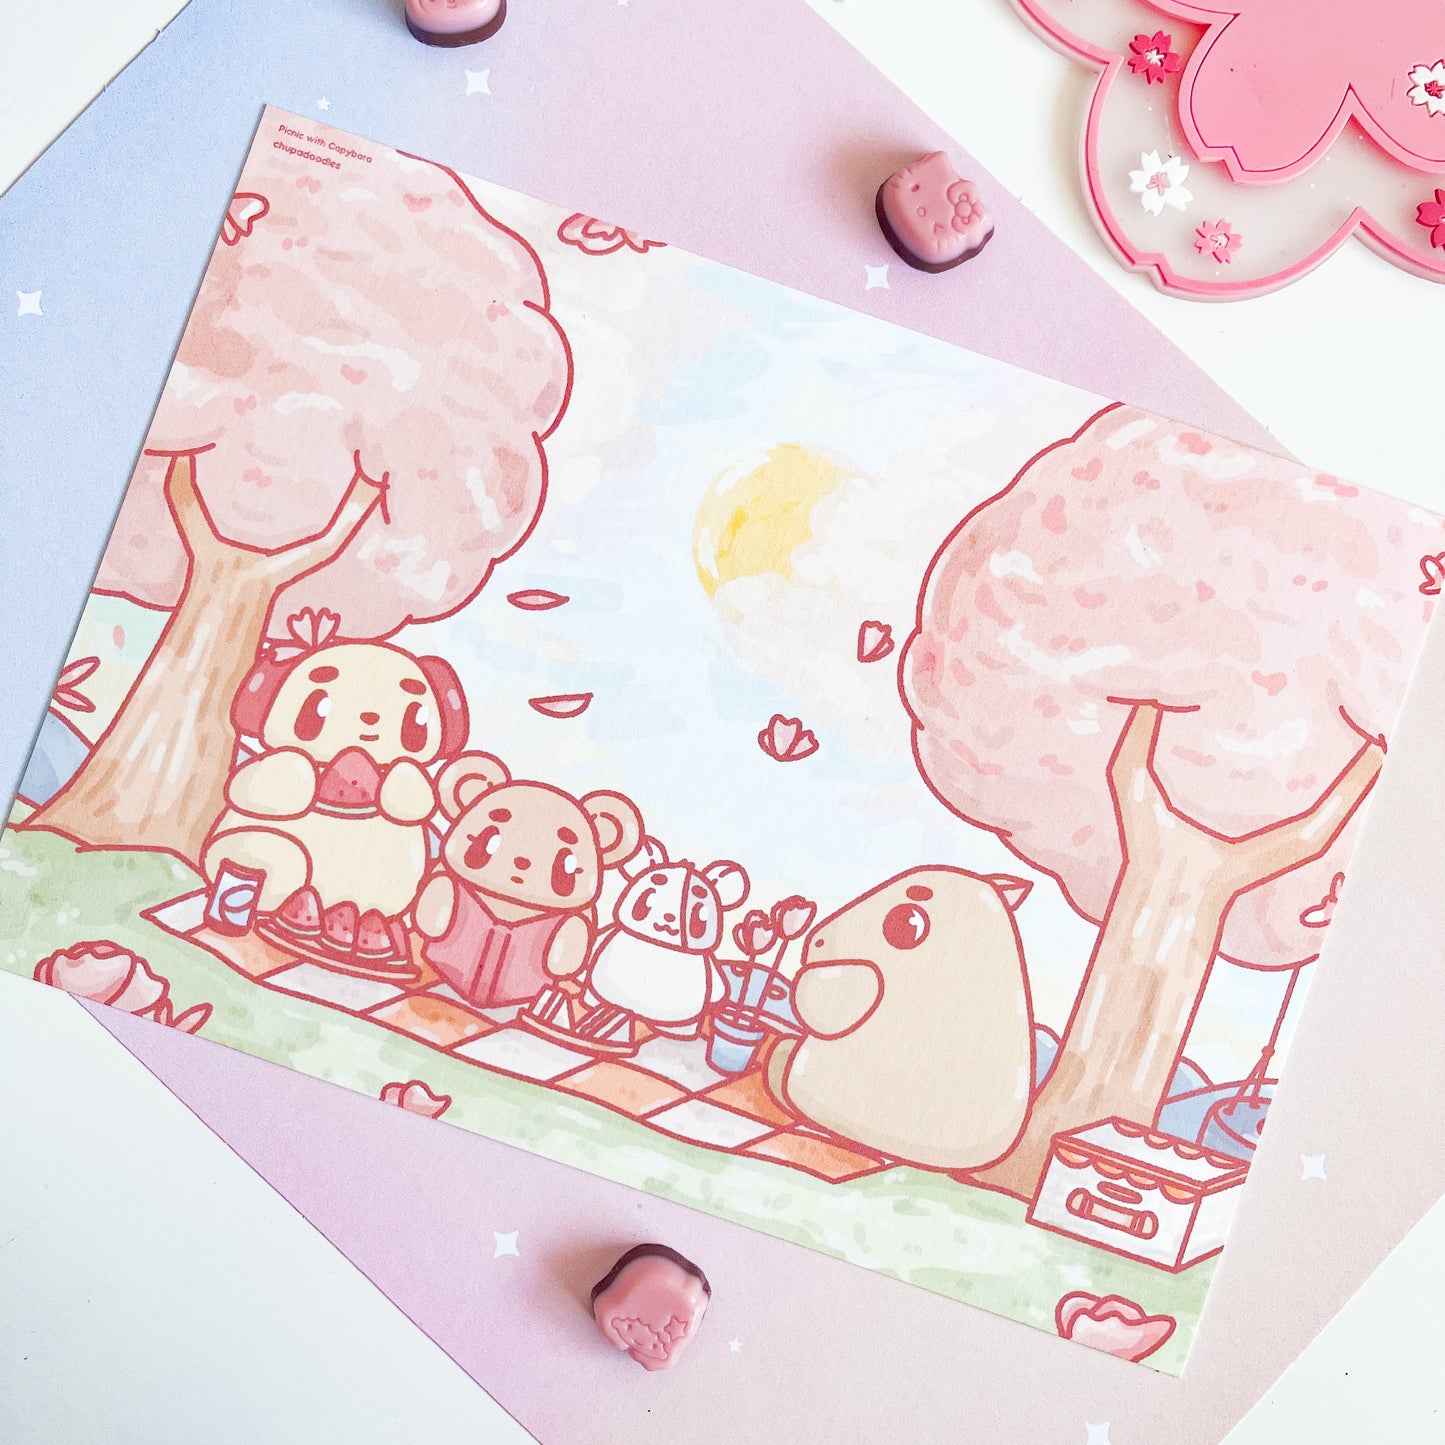 Capybara Cherry Blossom Picnic Art Print